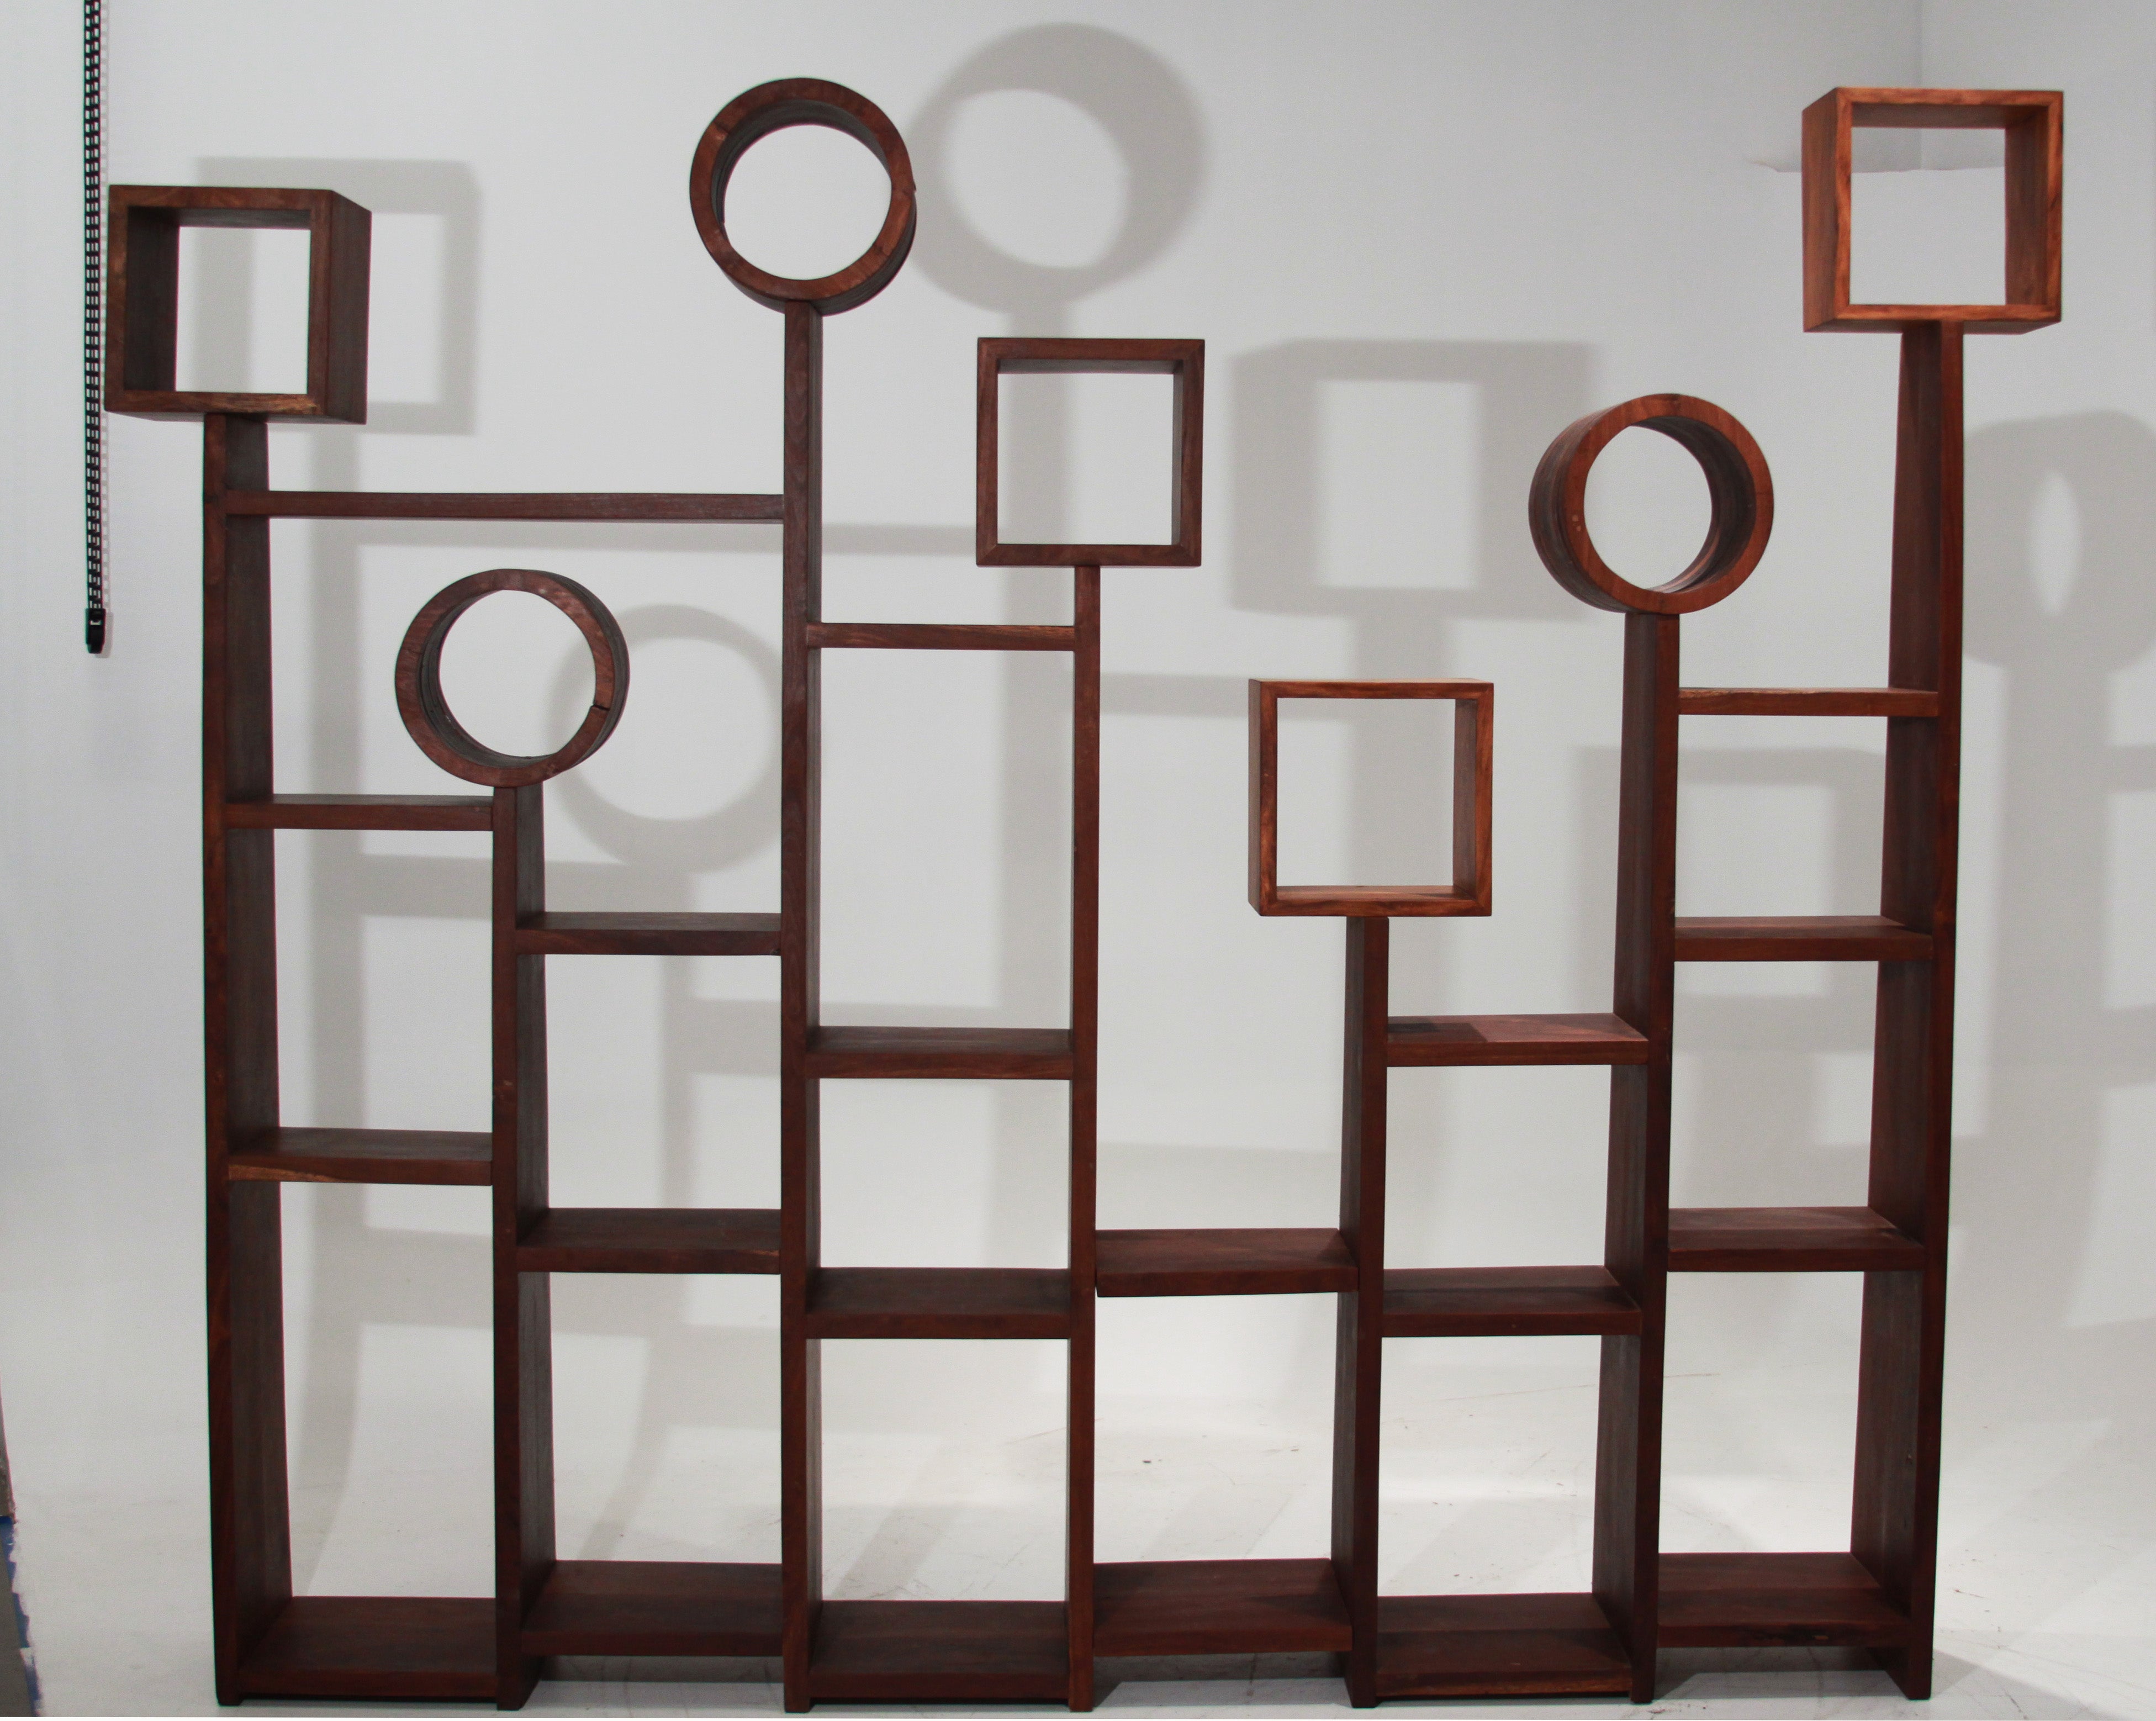 Large solid Sucu Pira Preta geometric bookshelf by Tunico T.